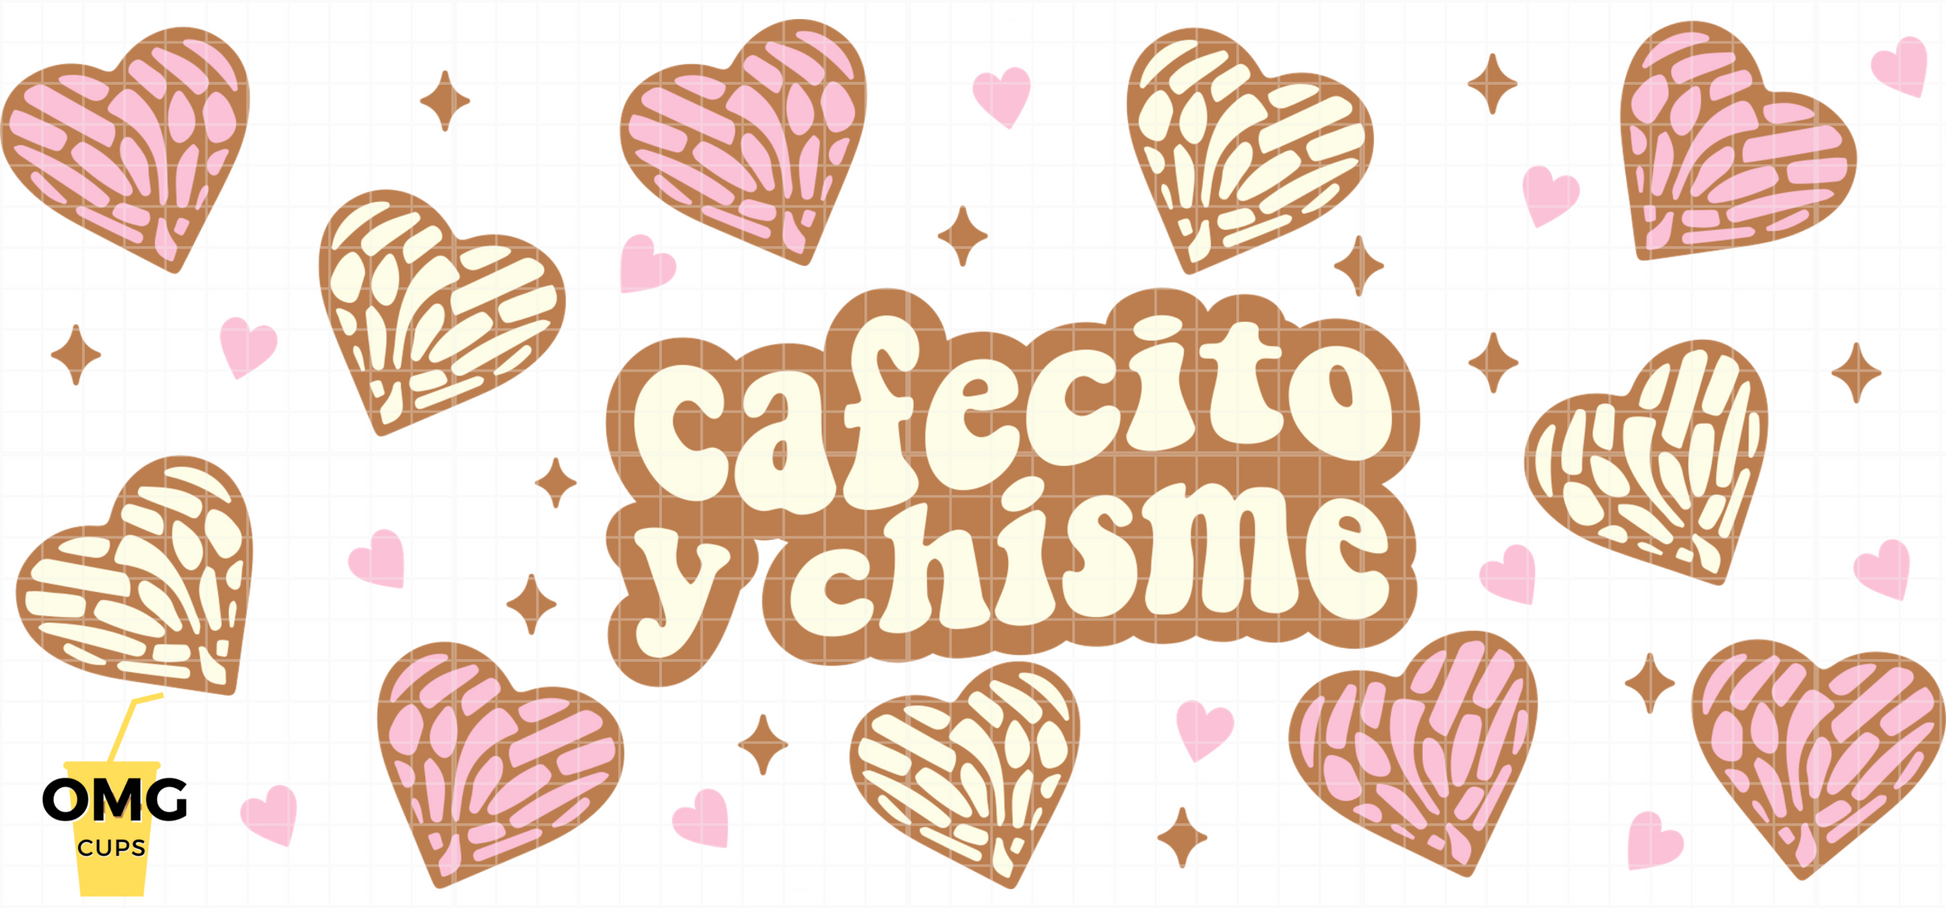 Cafecito I Cafecito cups I Cups I Cafecito time I Cafecito y Chisme I Cafe  I Personalize I Gifts I Tasitas